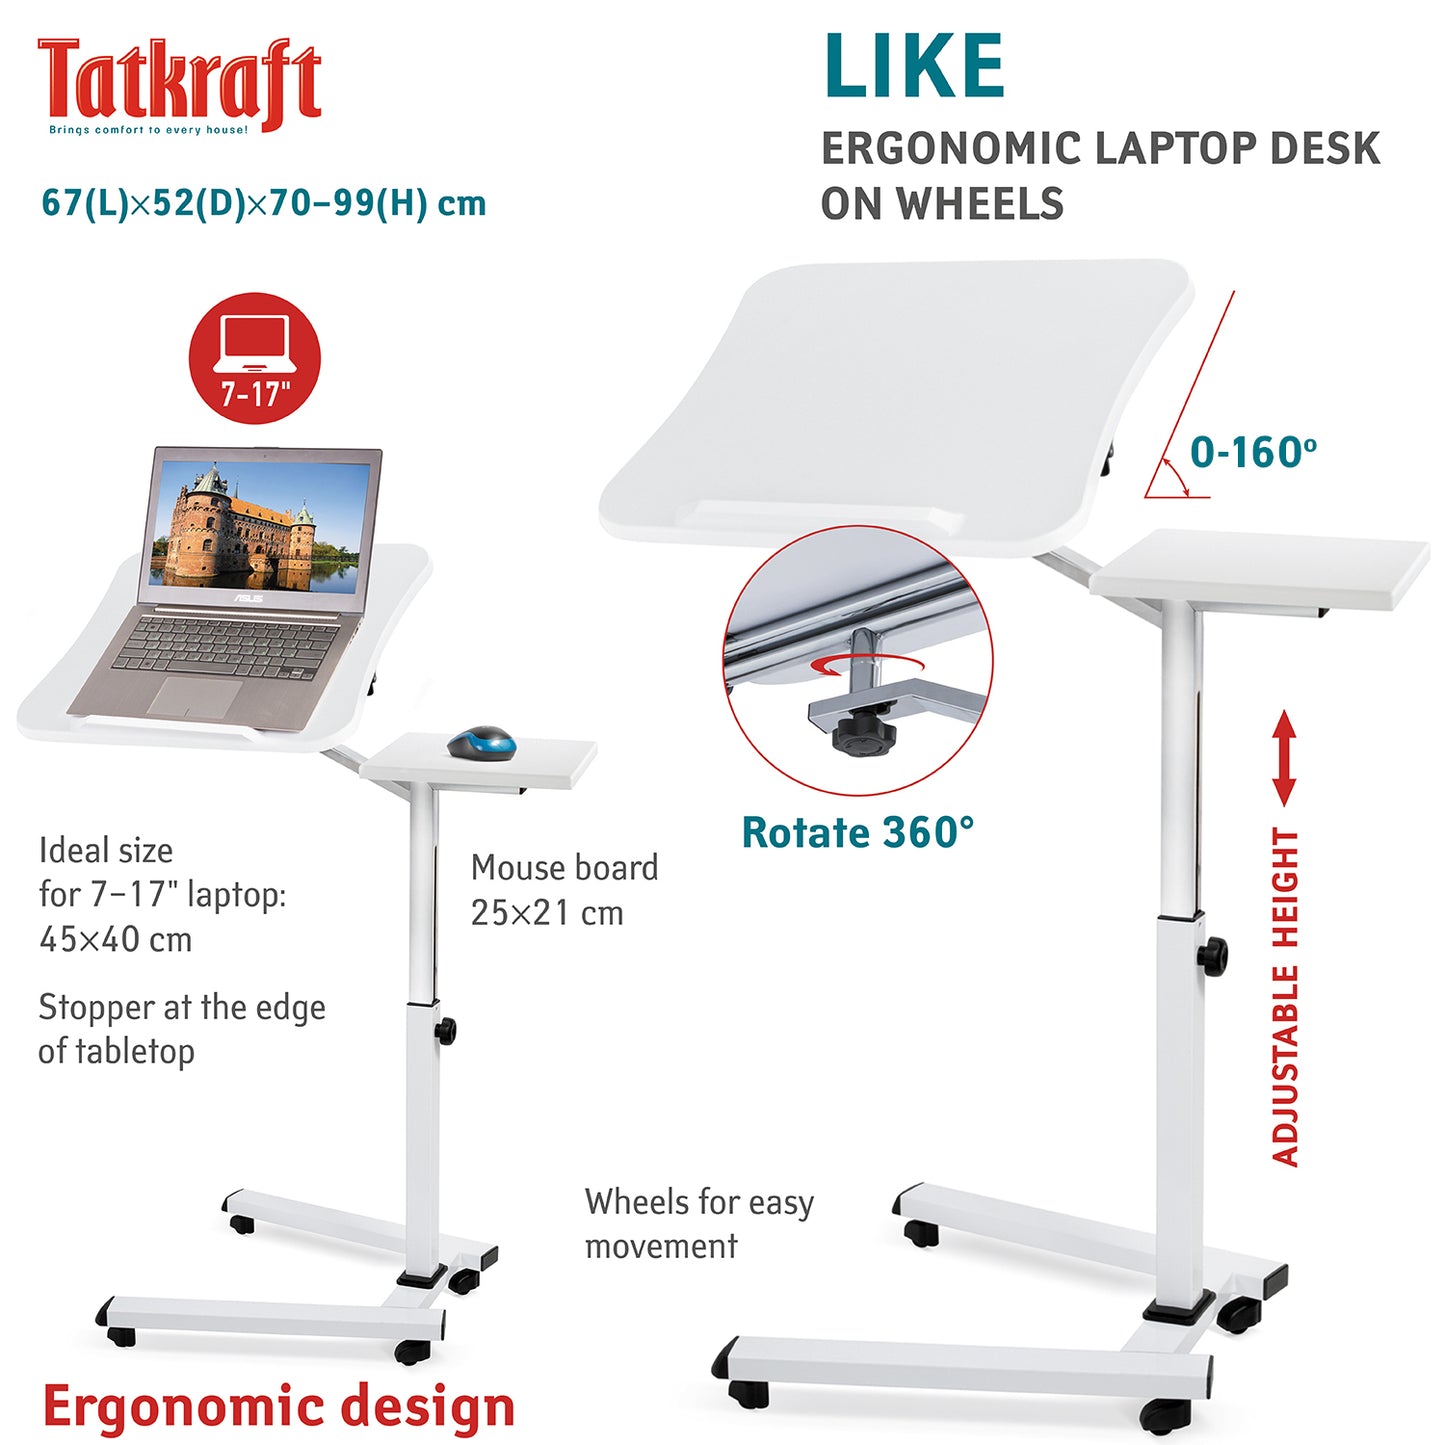 Adjustable Laptop Table, Portable Laptop Desk, Sofa Desk, Laptop Bed Table, with Mouse Pad, Desk on Wheels, Tatkraft Like, 4